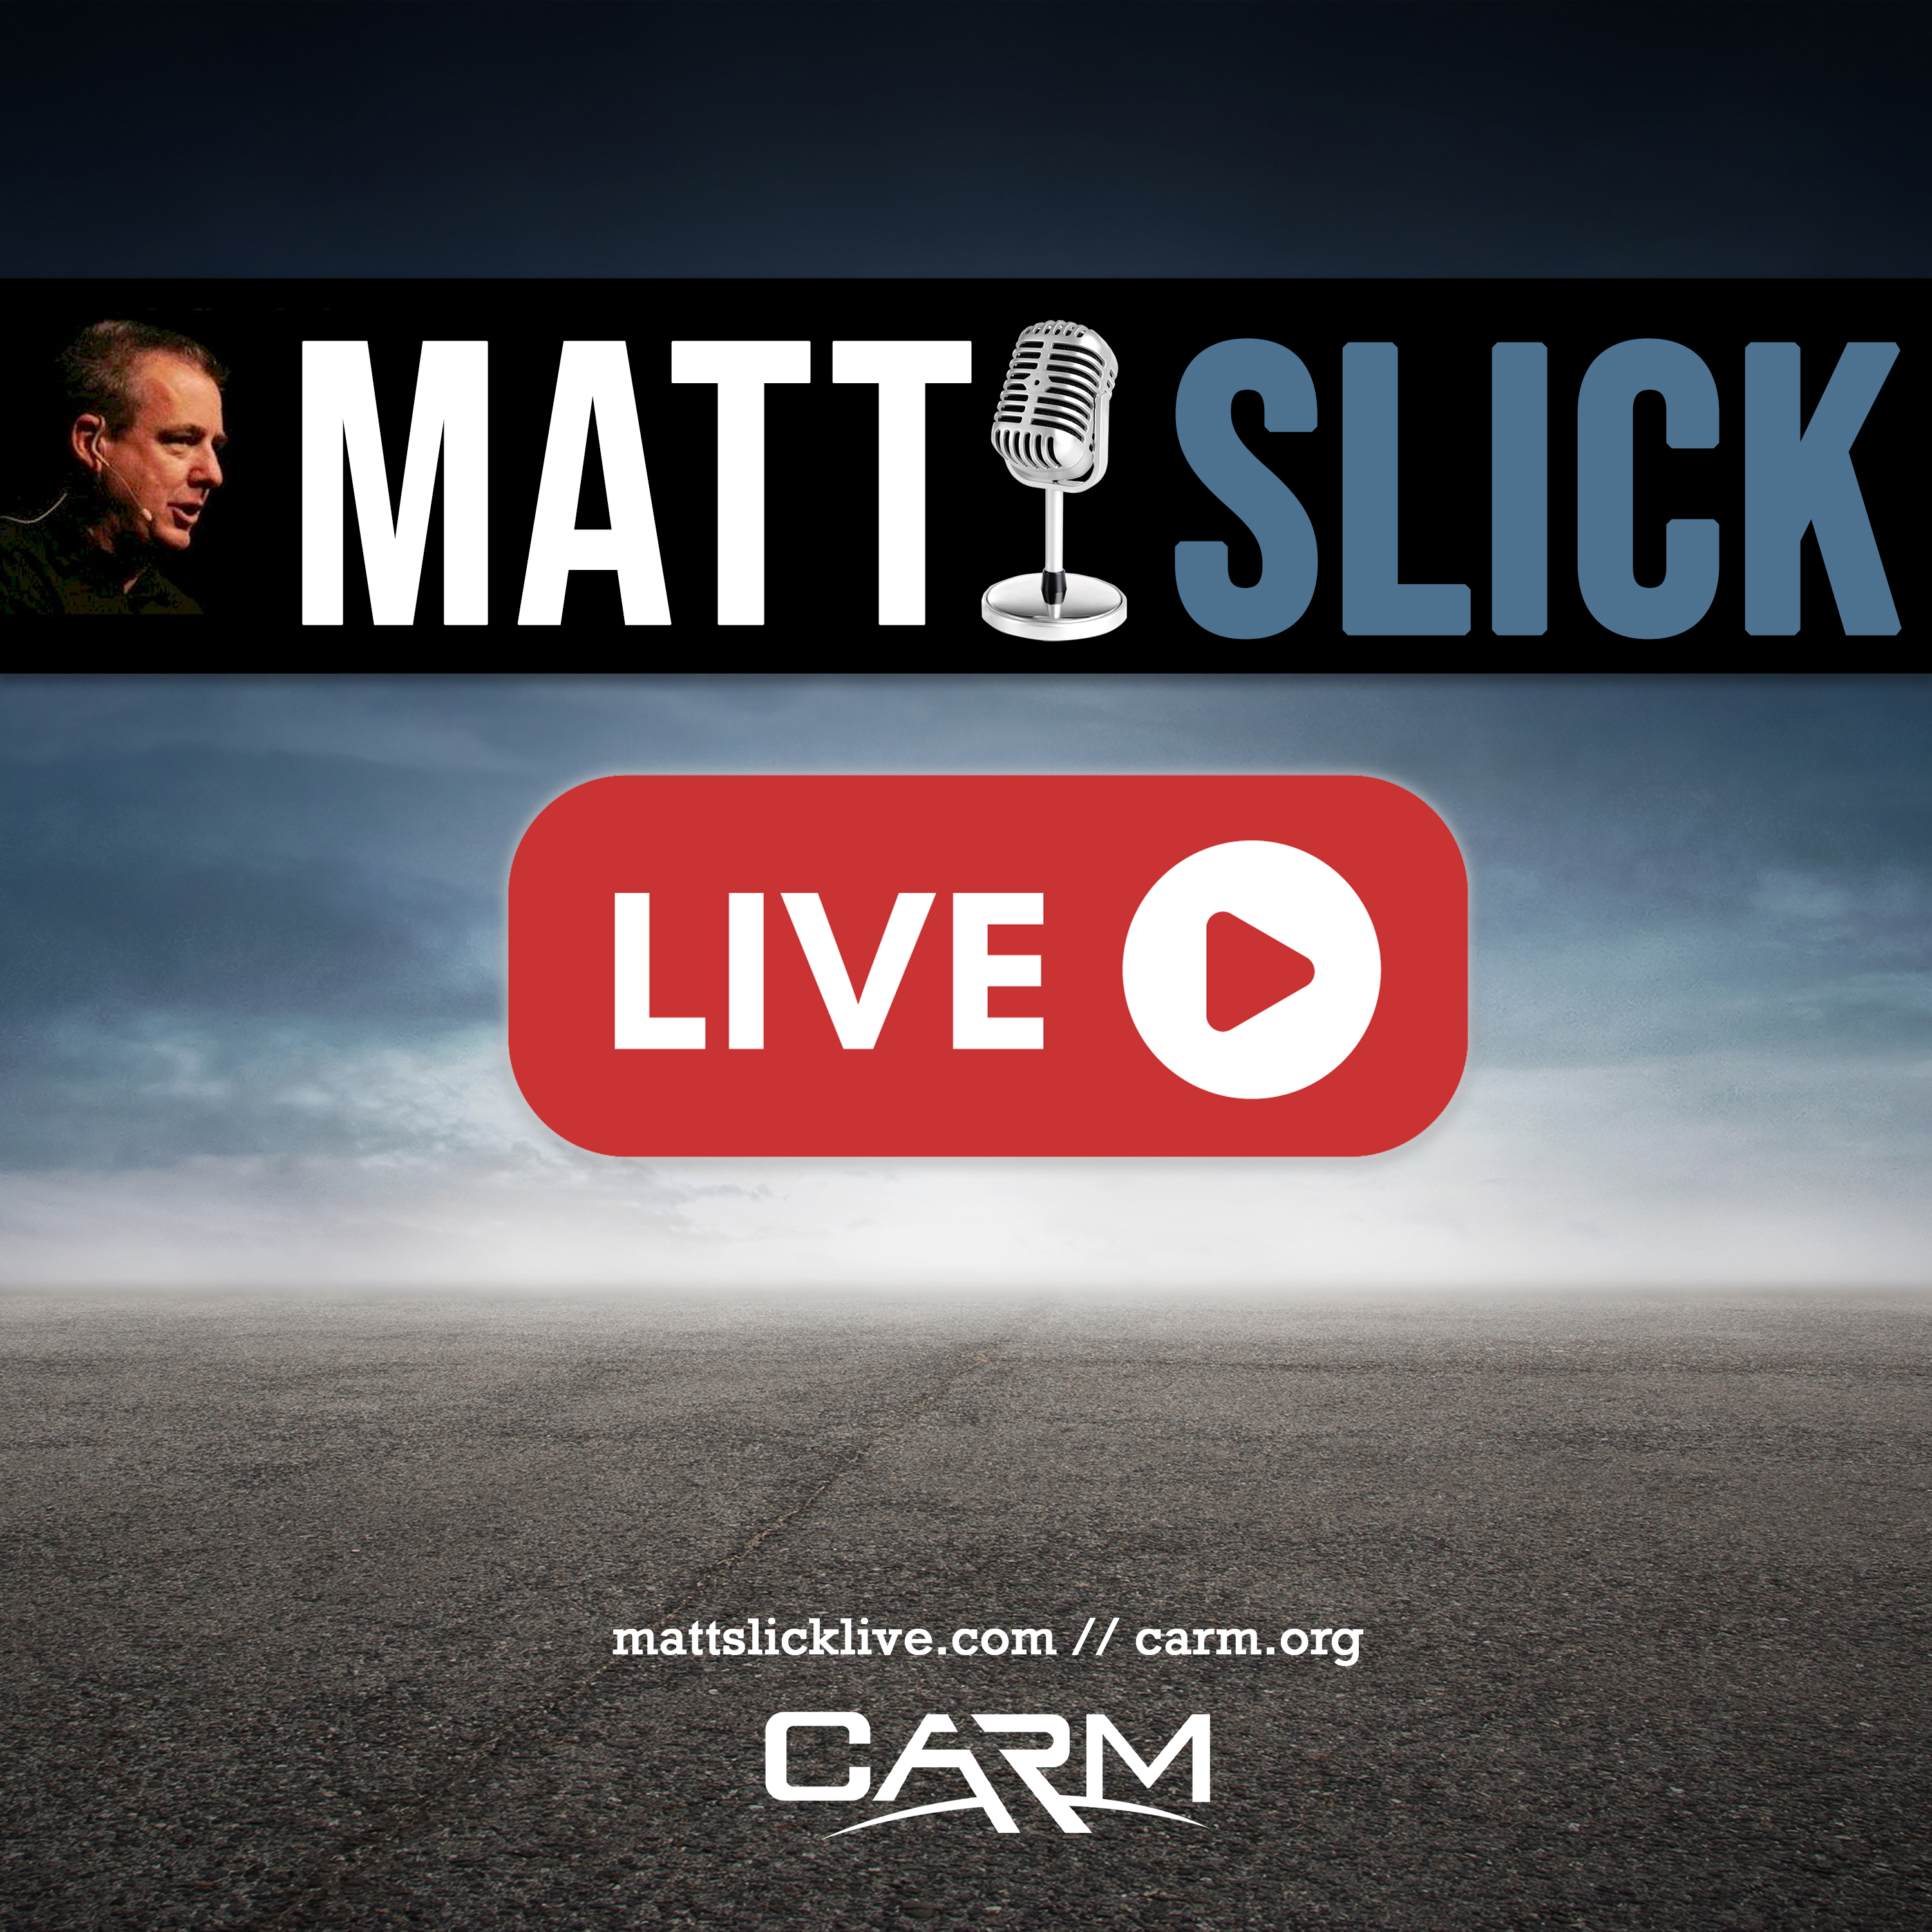 Matt Slick LIVE